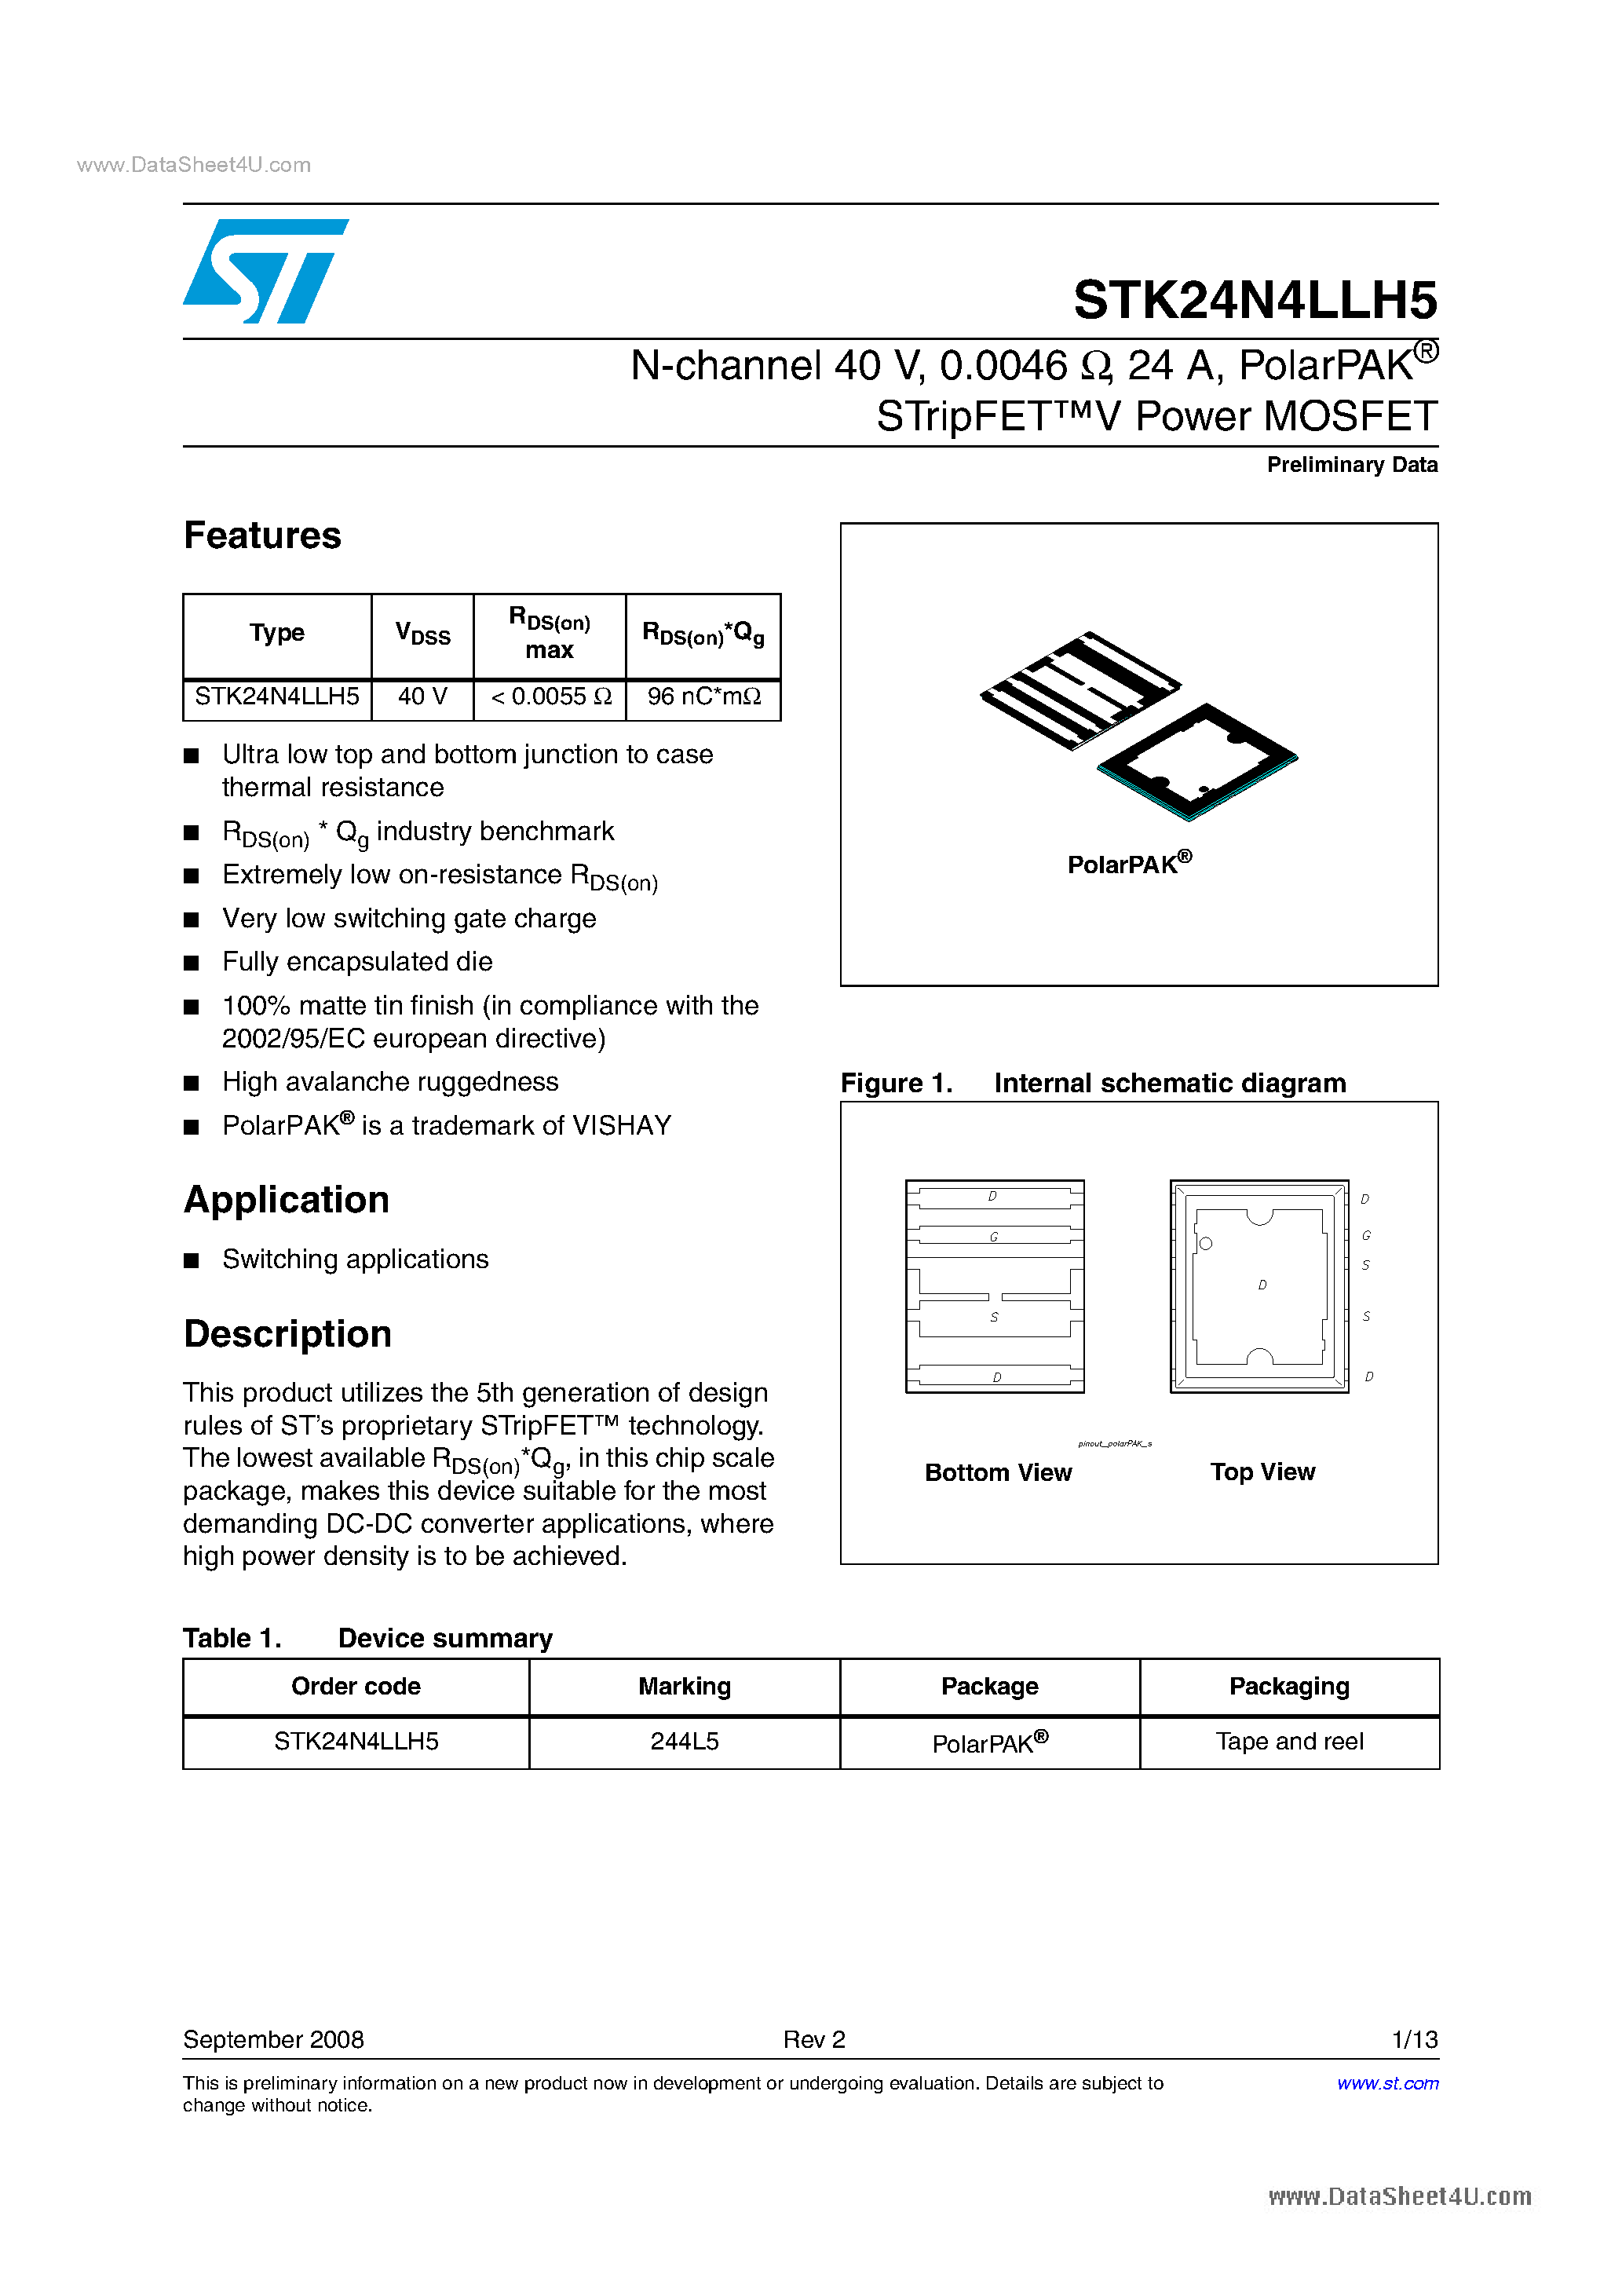 Datasheet STK24N4LLH5 - N-channel Power MOSFET page 1